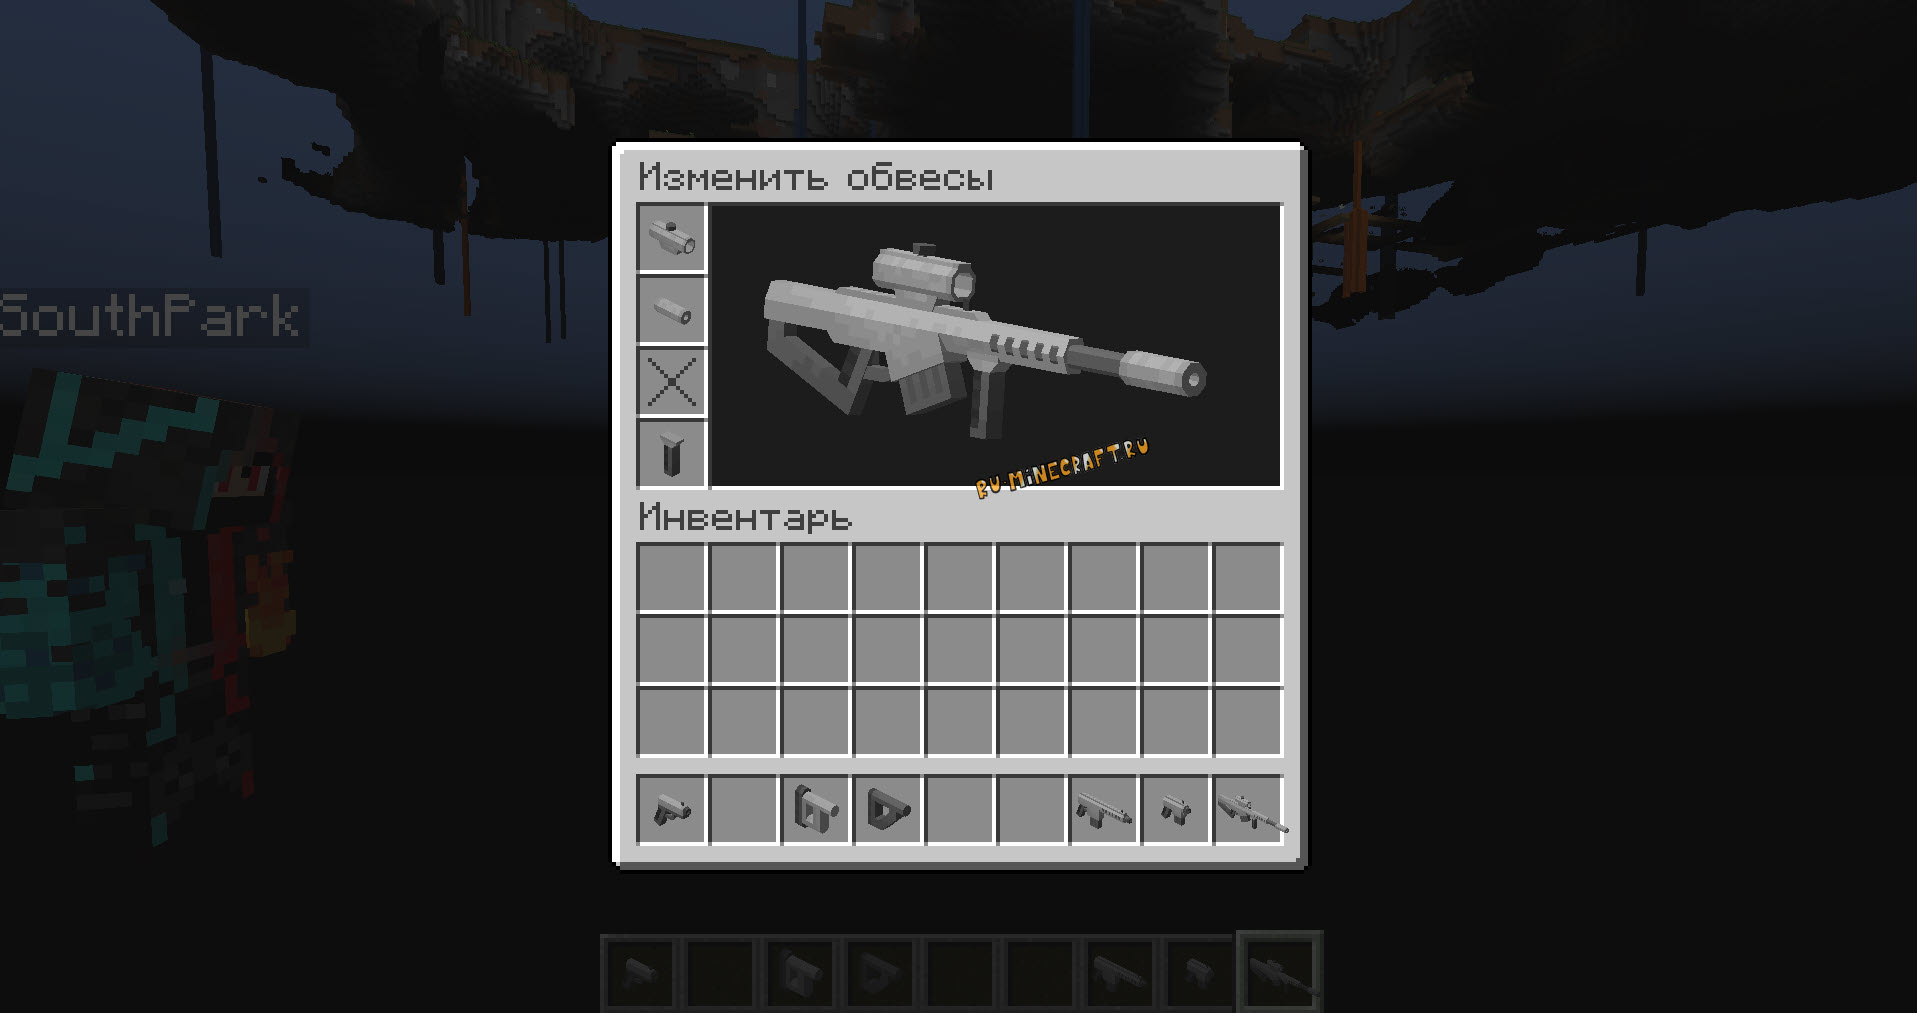 Майнкрафт mrcrayfish gun mod